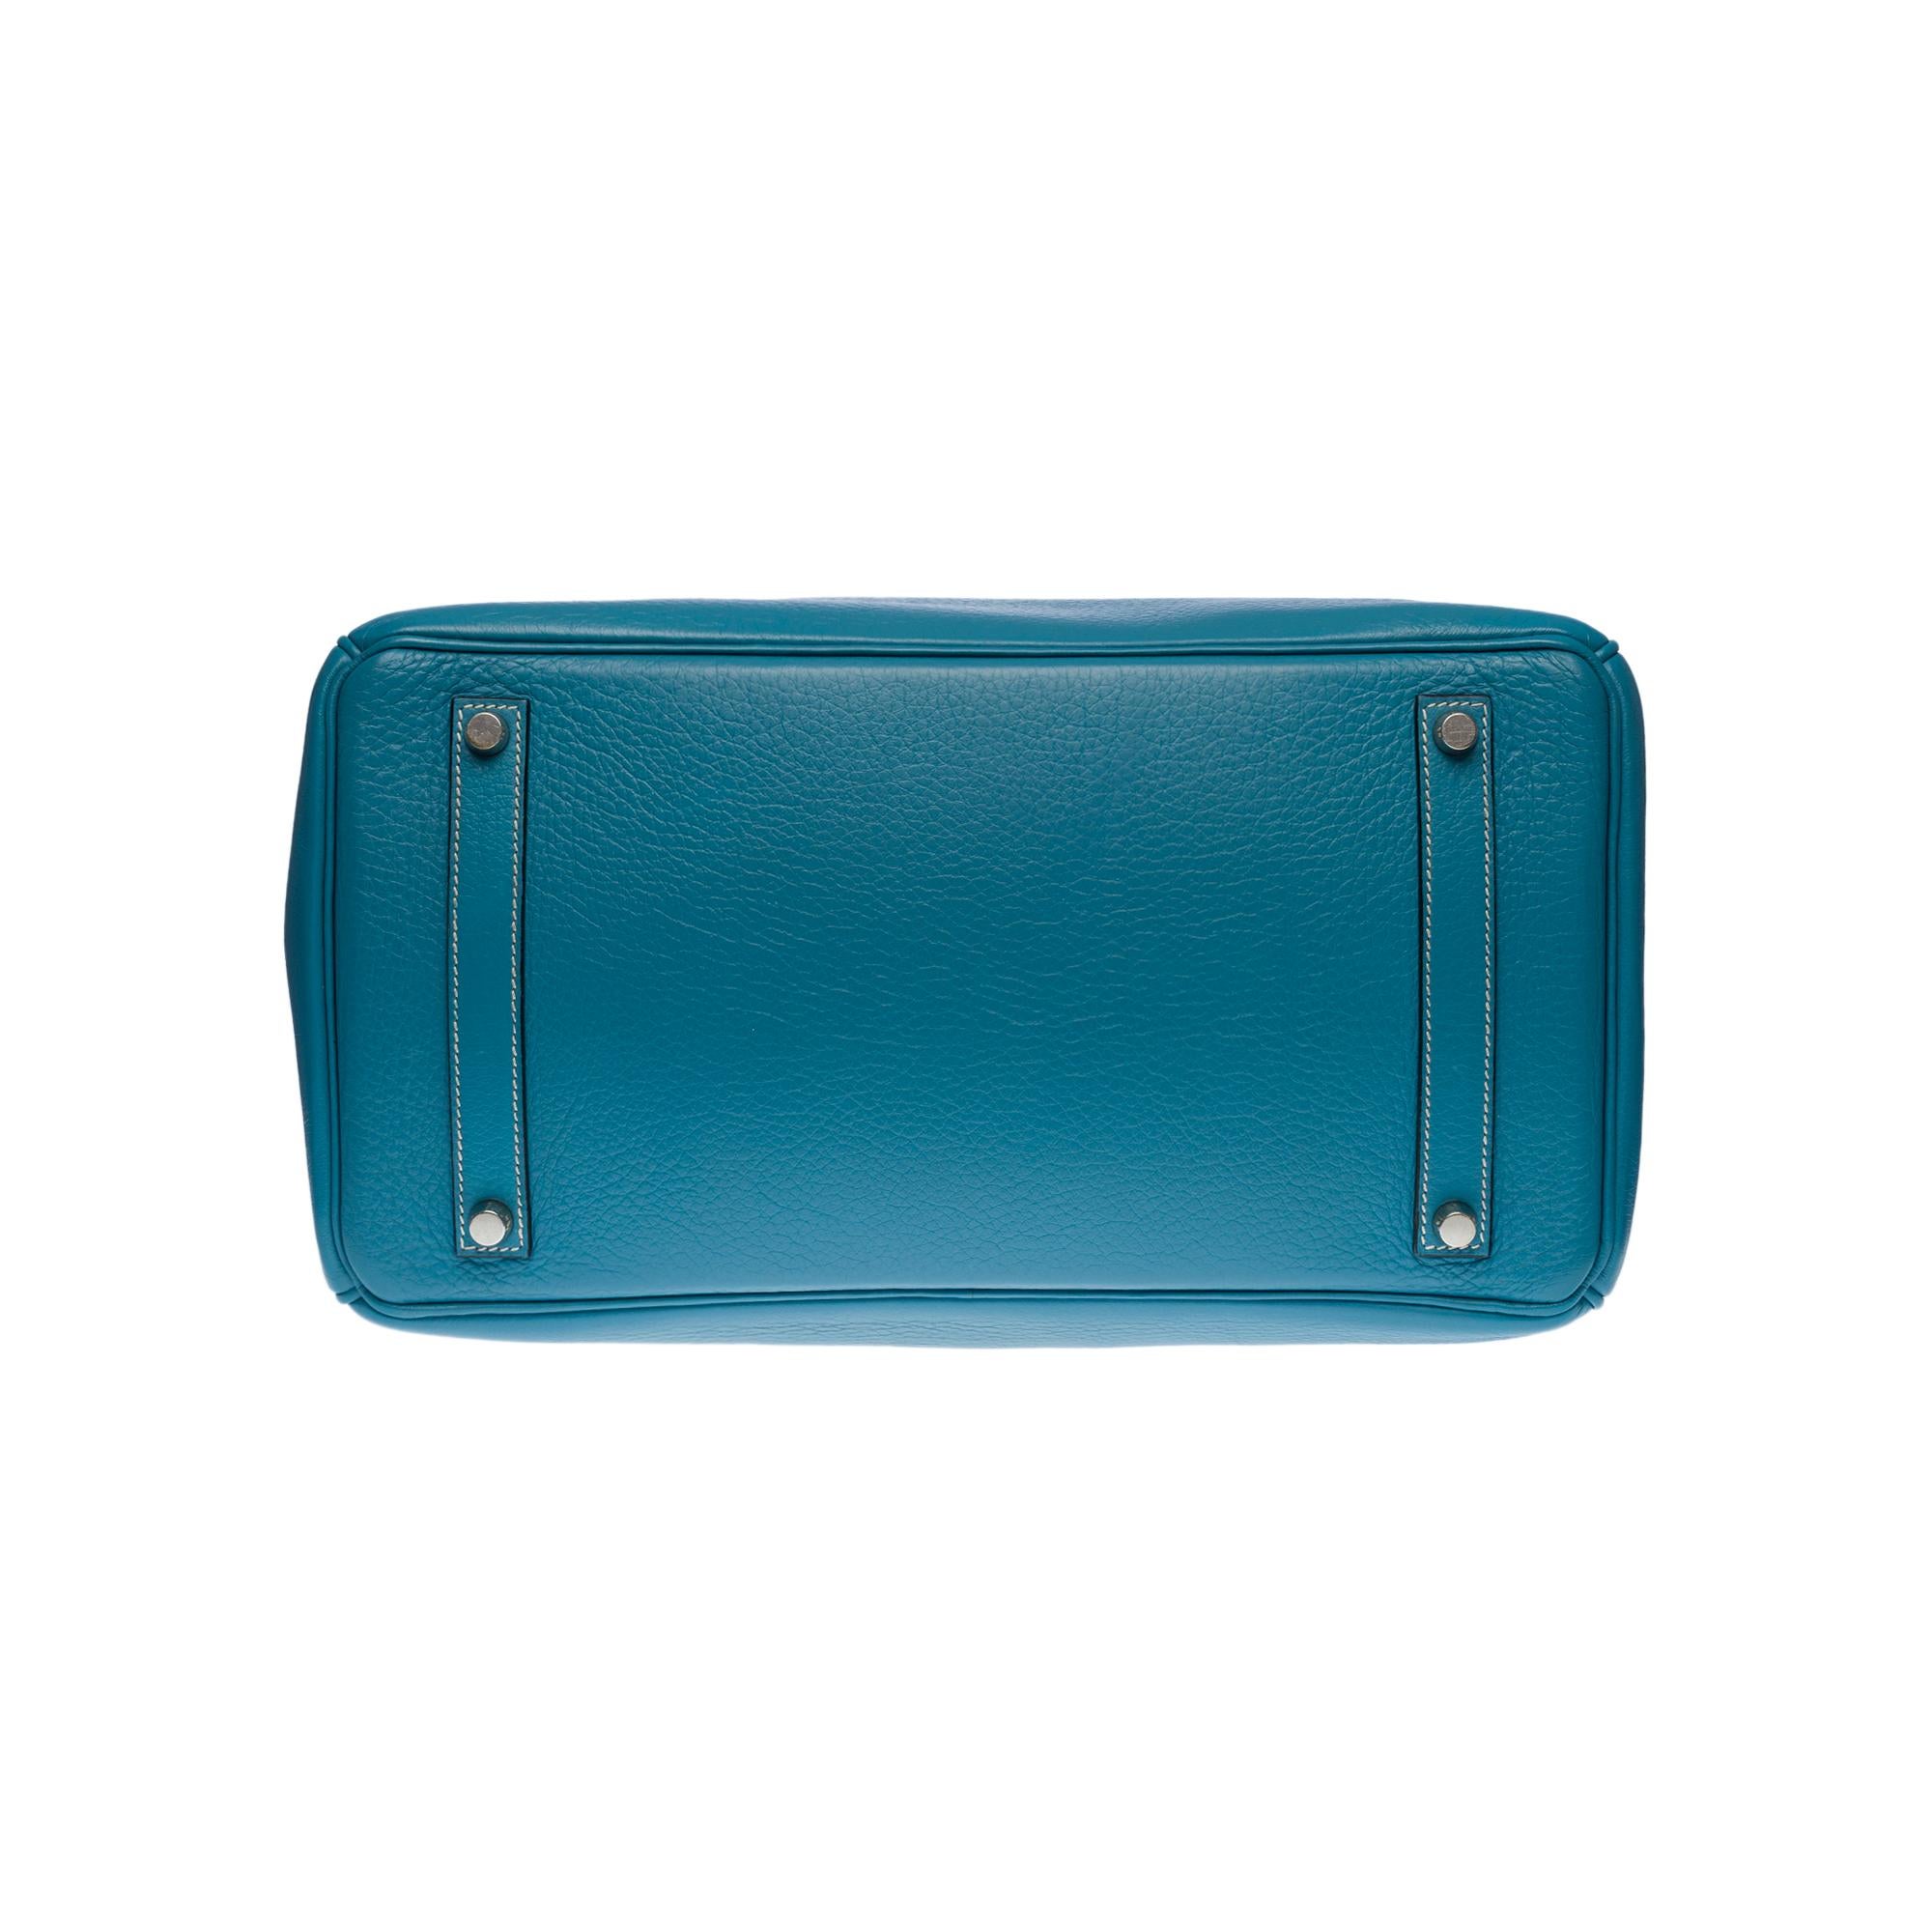 Gorgeous Hermès Birkin 35 handbag in blue jeans Togo leather, SHW  3